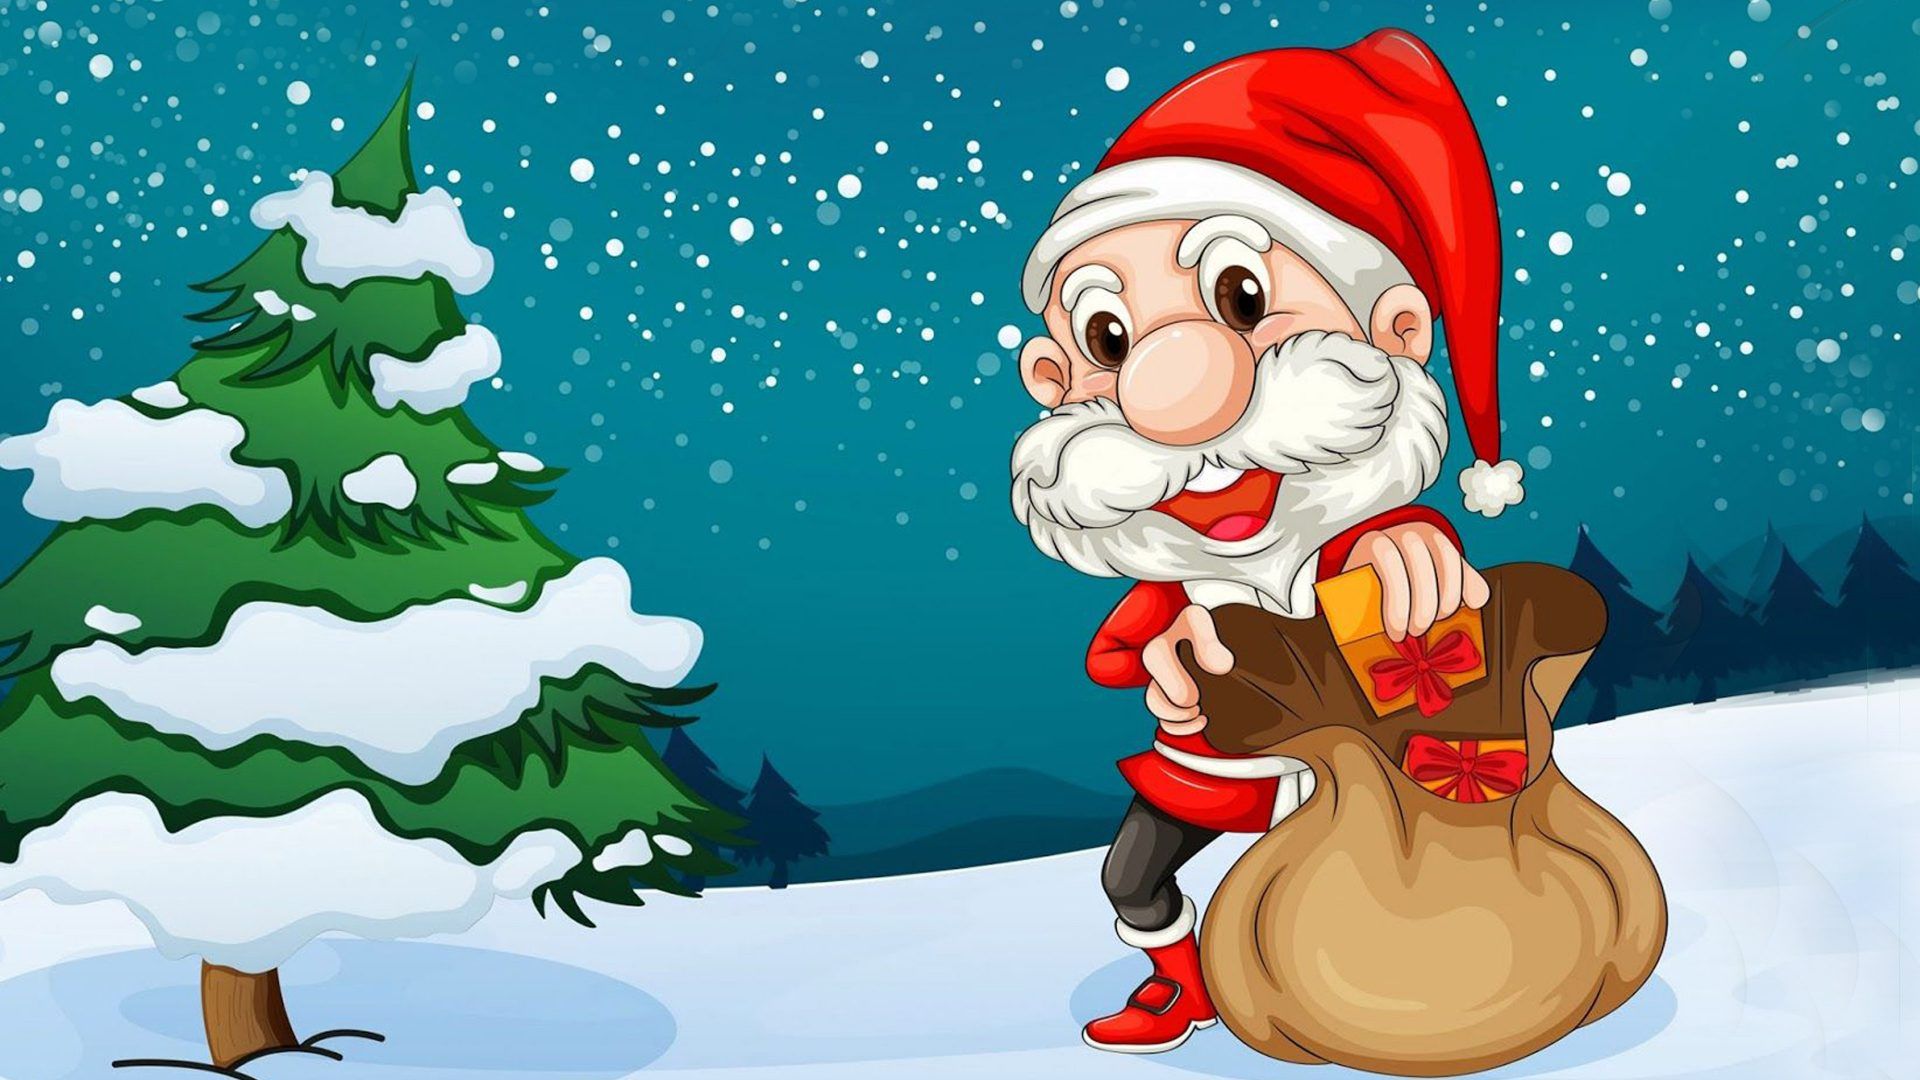 Merry Christmas Santa Claus Christmas tree Cartoon HD Wallpaper For Deskx2400, Wallpaper13.com